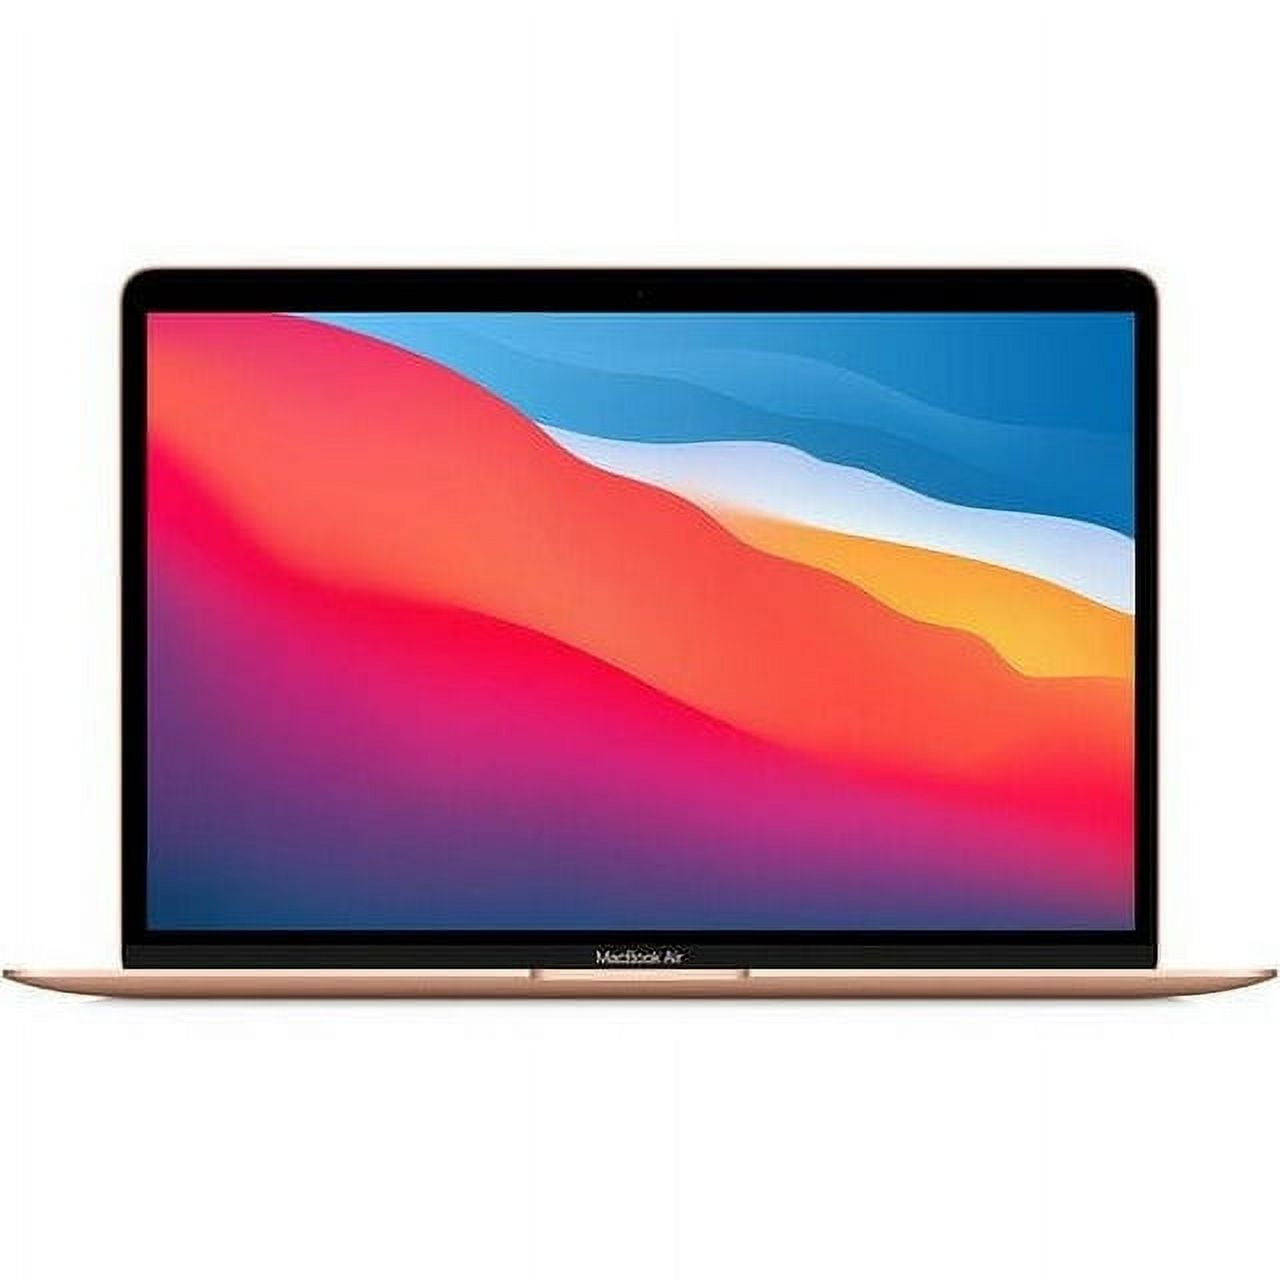 Restored Premium Late 2020 Apple MacBook Air Laptop with M1 chip: 13.3-inch, 8GB RAM, 512GB SSD Storage, Gold (Refurbished)